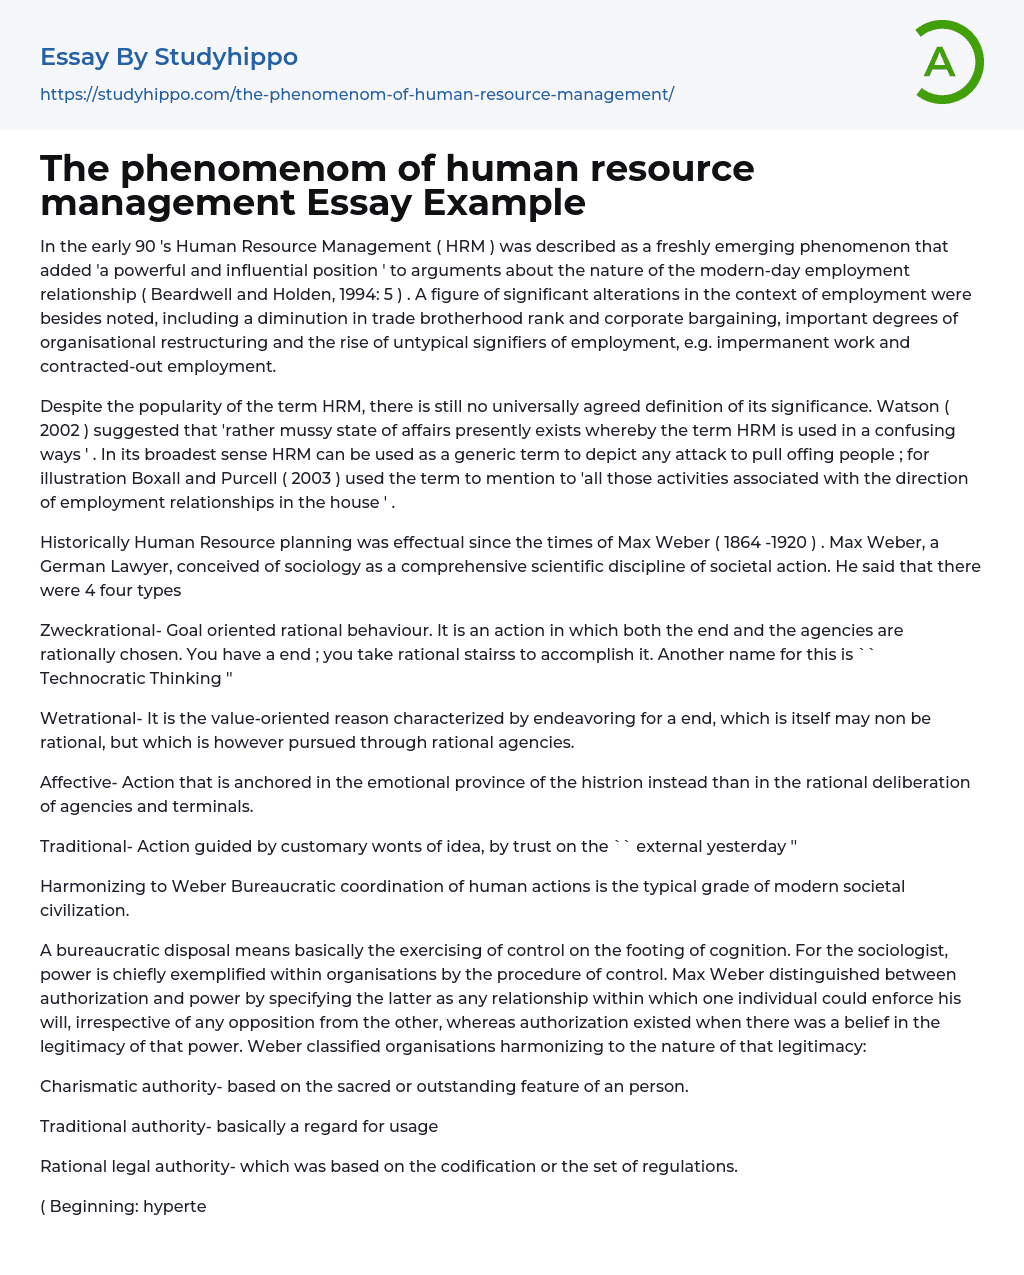 The phenomenom of human resource management Essay Example